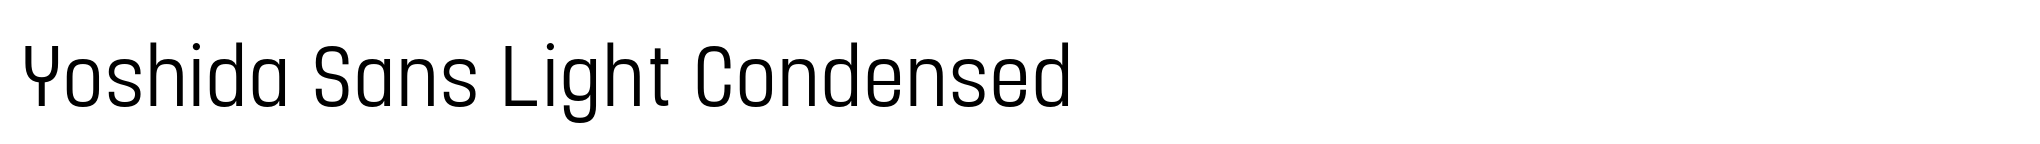 Yoshida Sans Light Condensed image